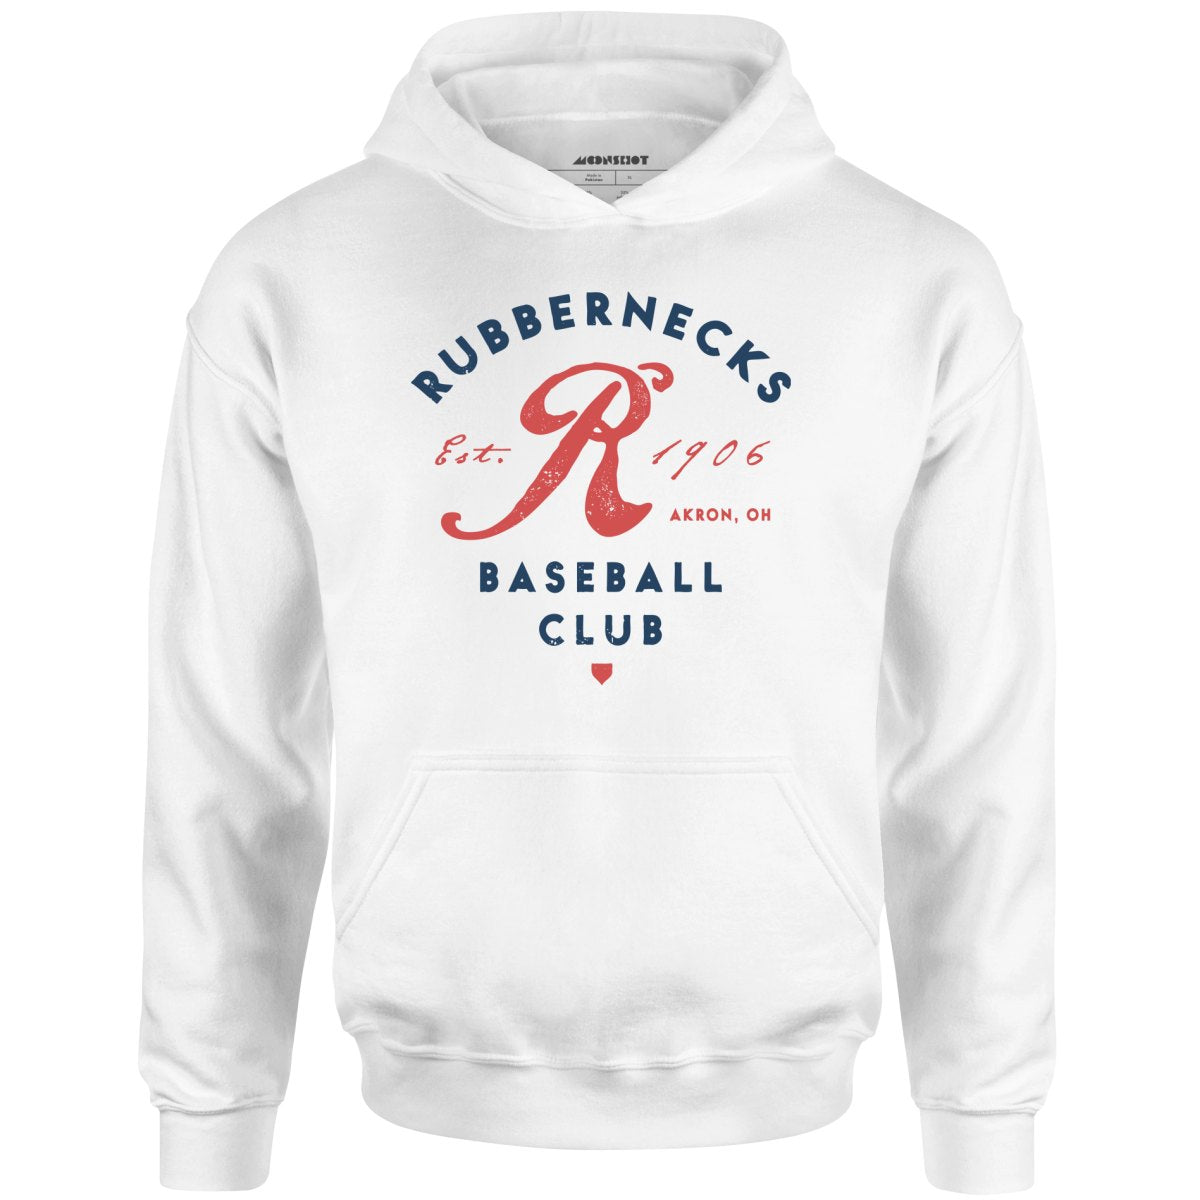 Akron Rubbernecks - Ohio - Vintage Defunct Baseball Teams - Unisex Hoodie